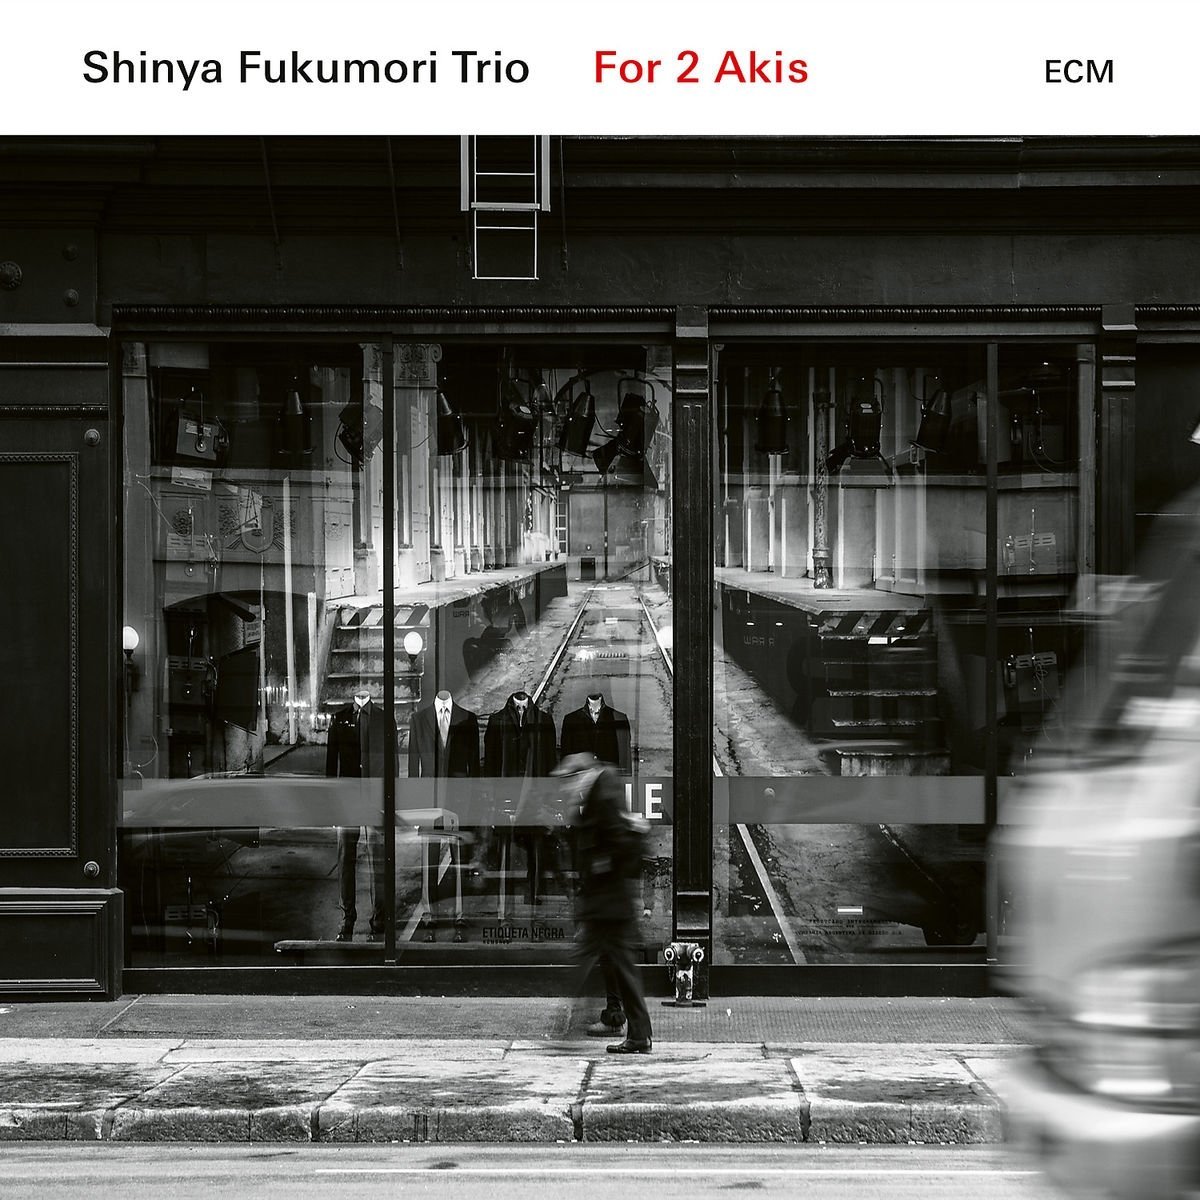 For 2 Akis | Shinya Fukumori Trio